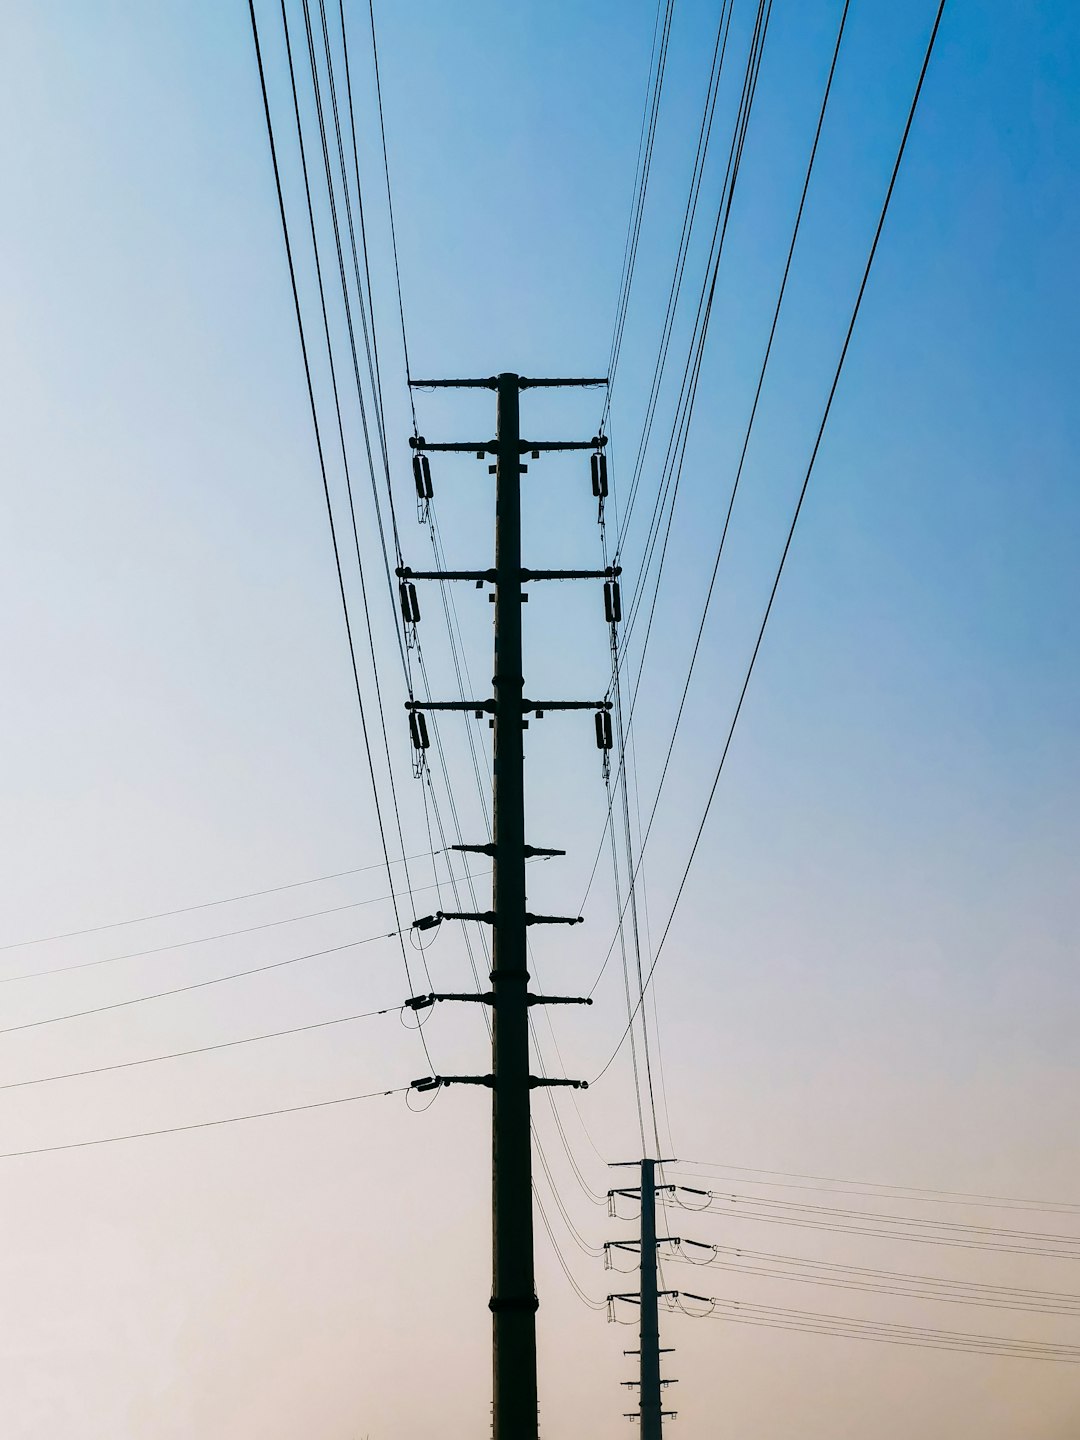 black electric post under blue sky during daytime